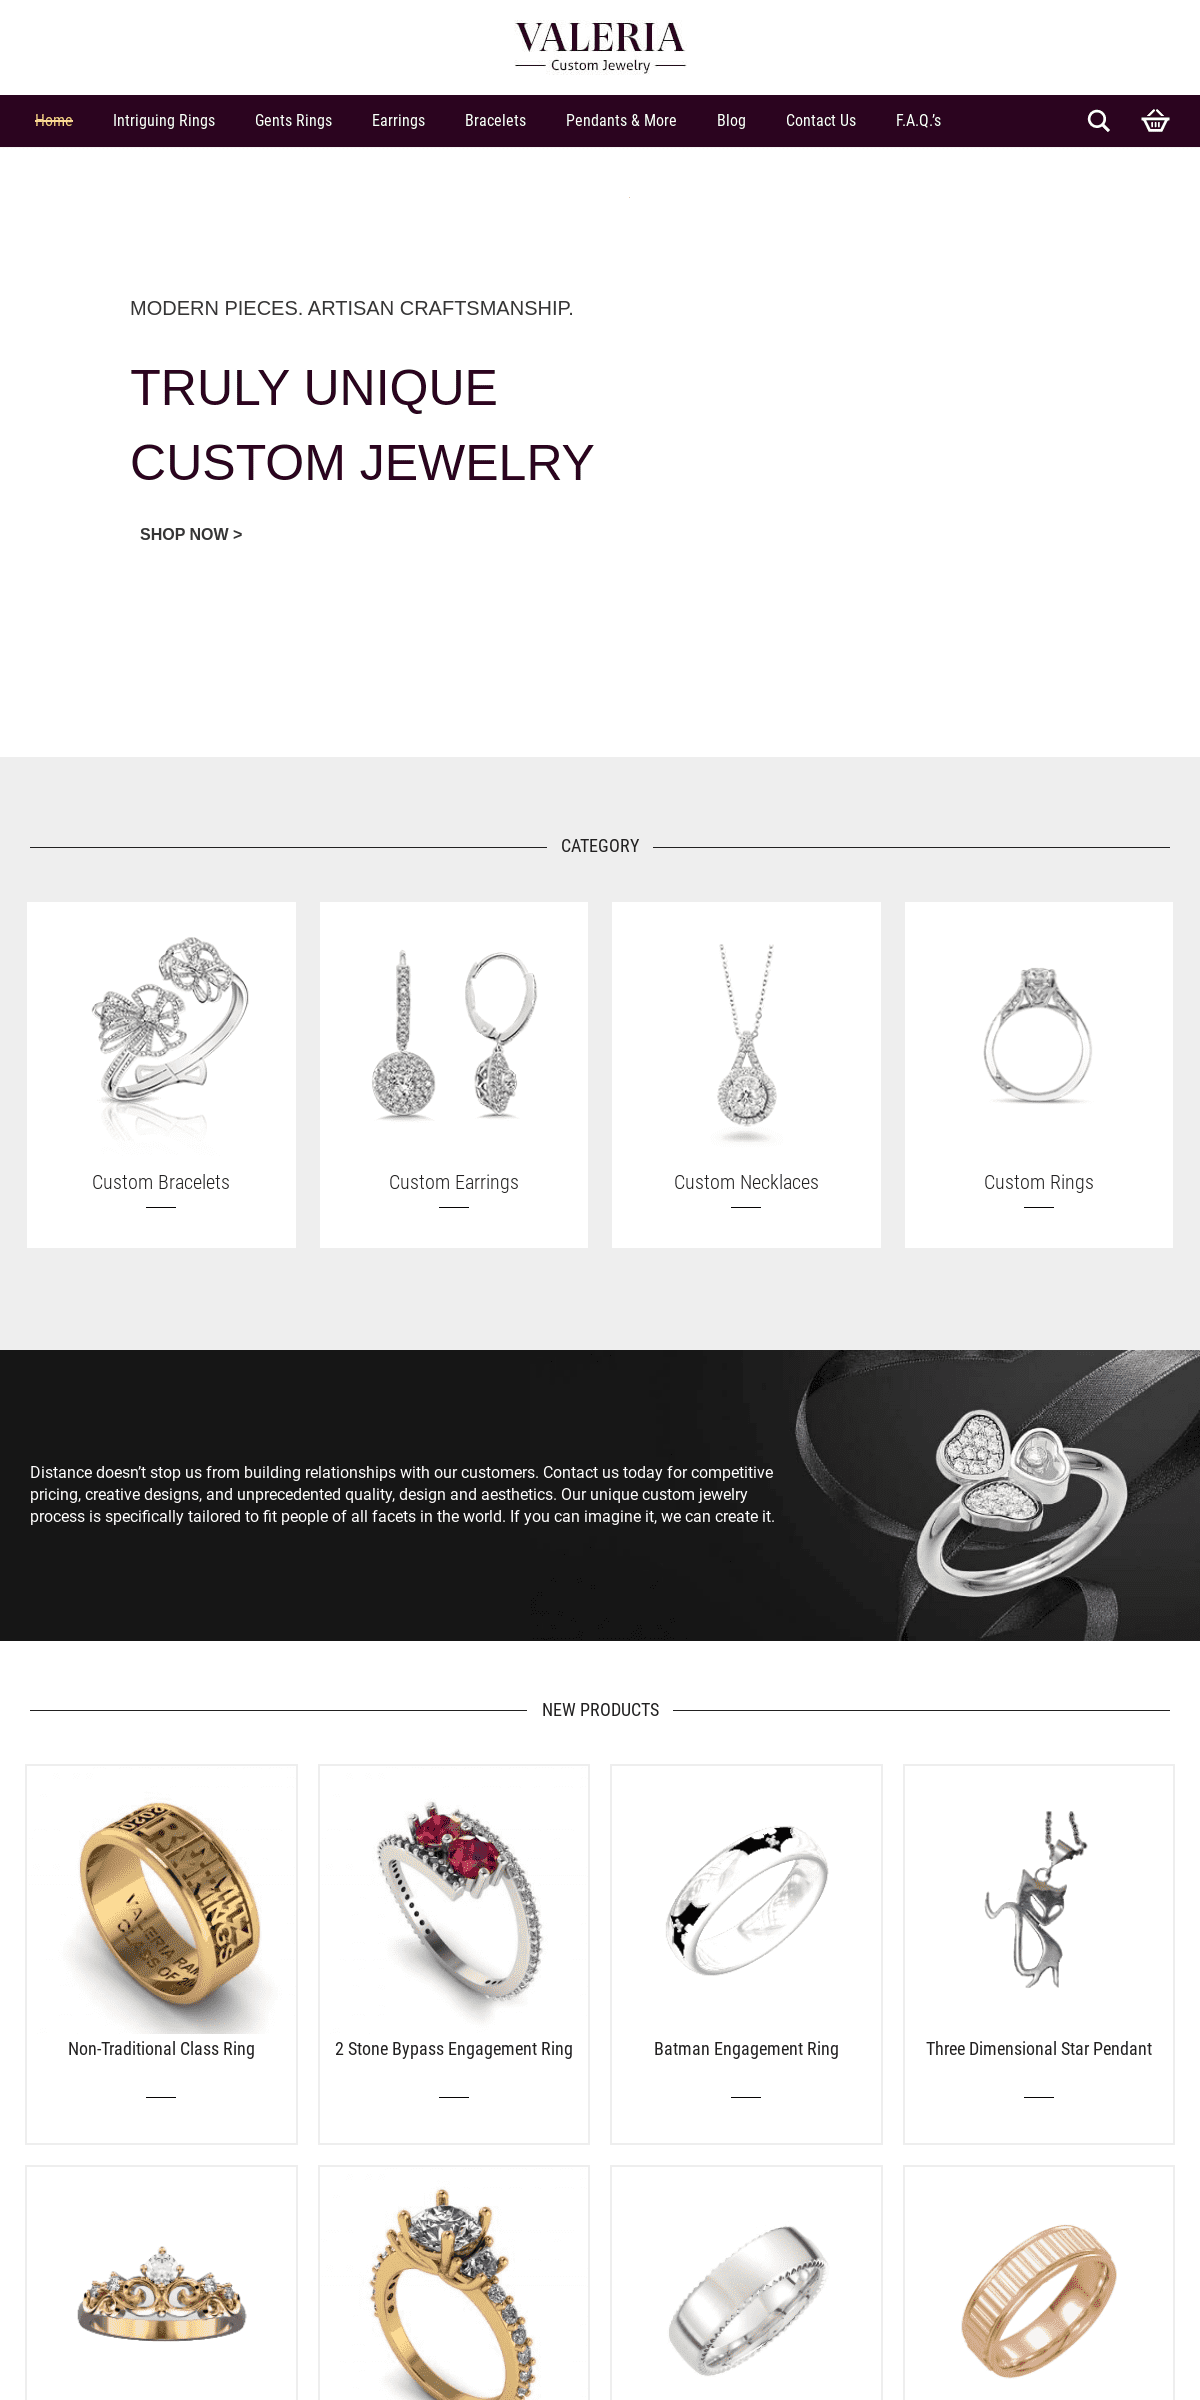 A complete backup of valeriacustomjewelry.com